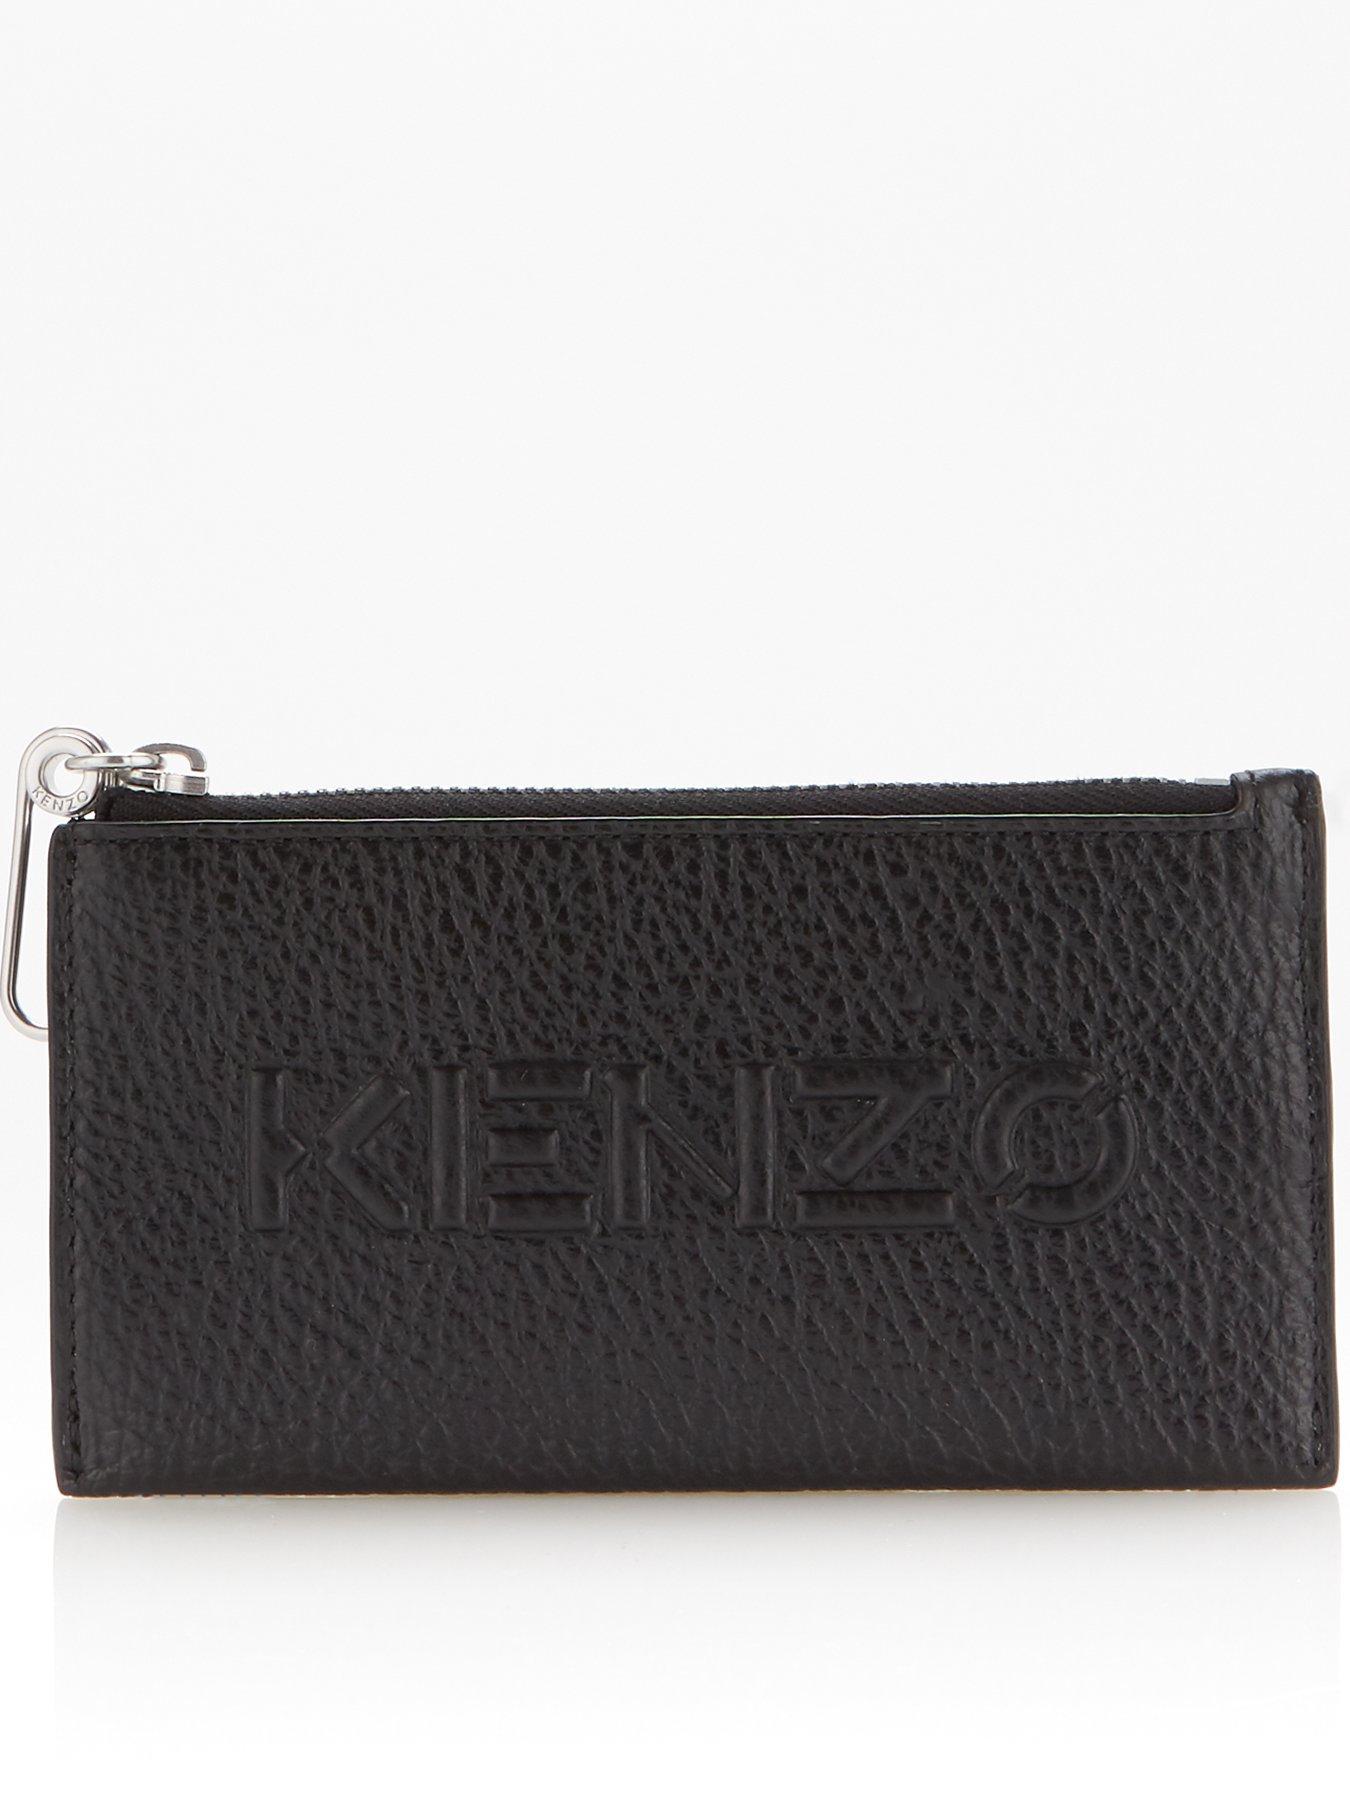 Kenzo Zip Top Card Holder - Black